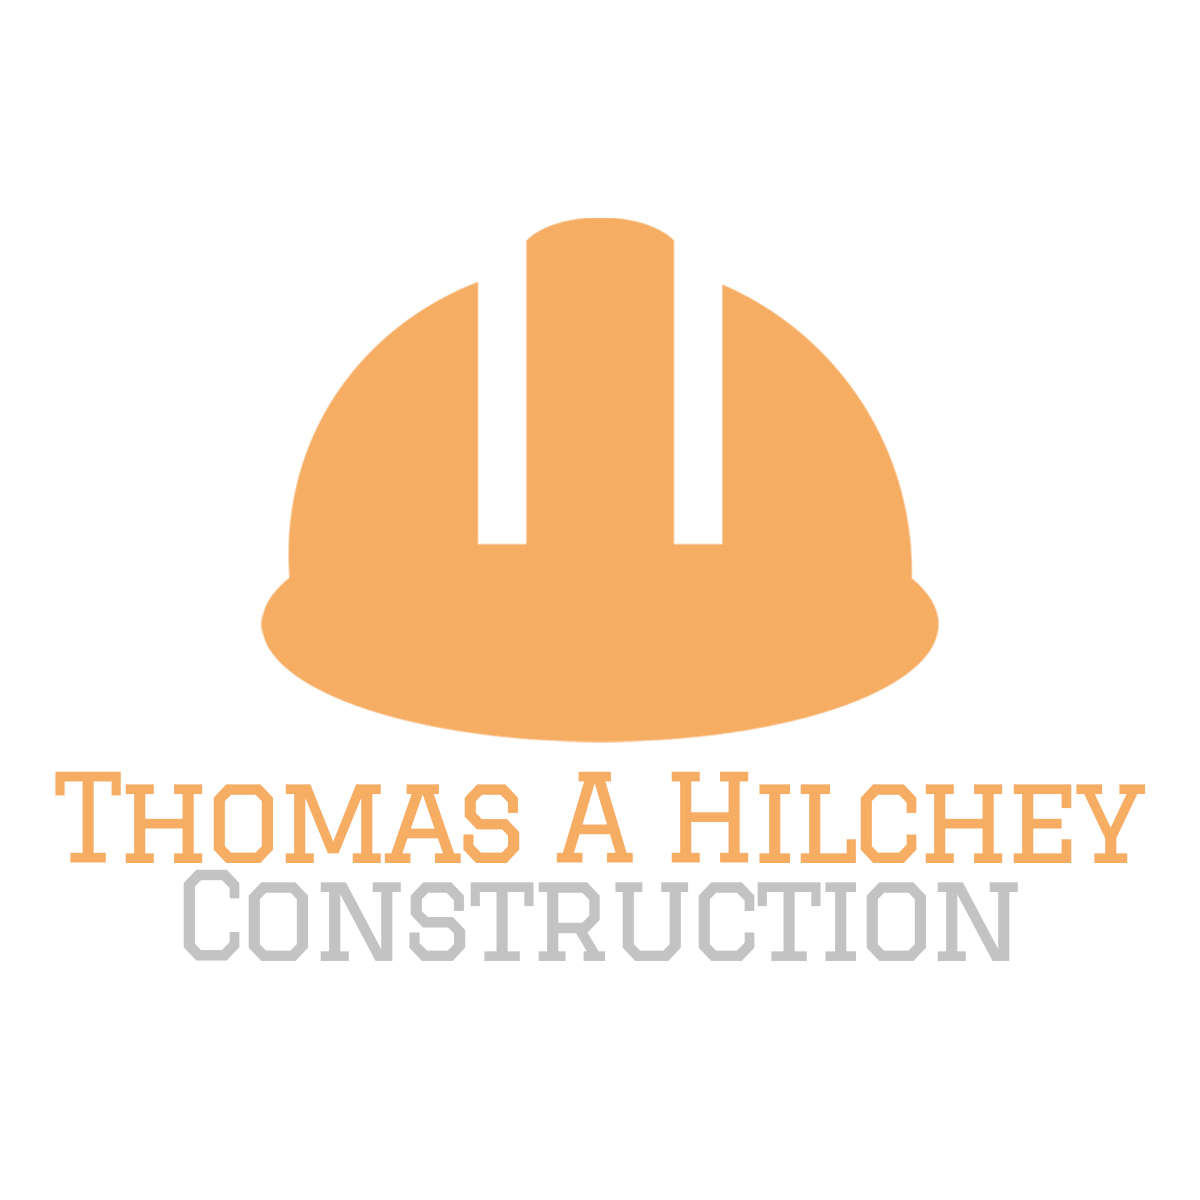 Thomas A Hilchey Construction Company Logo